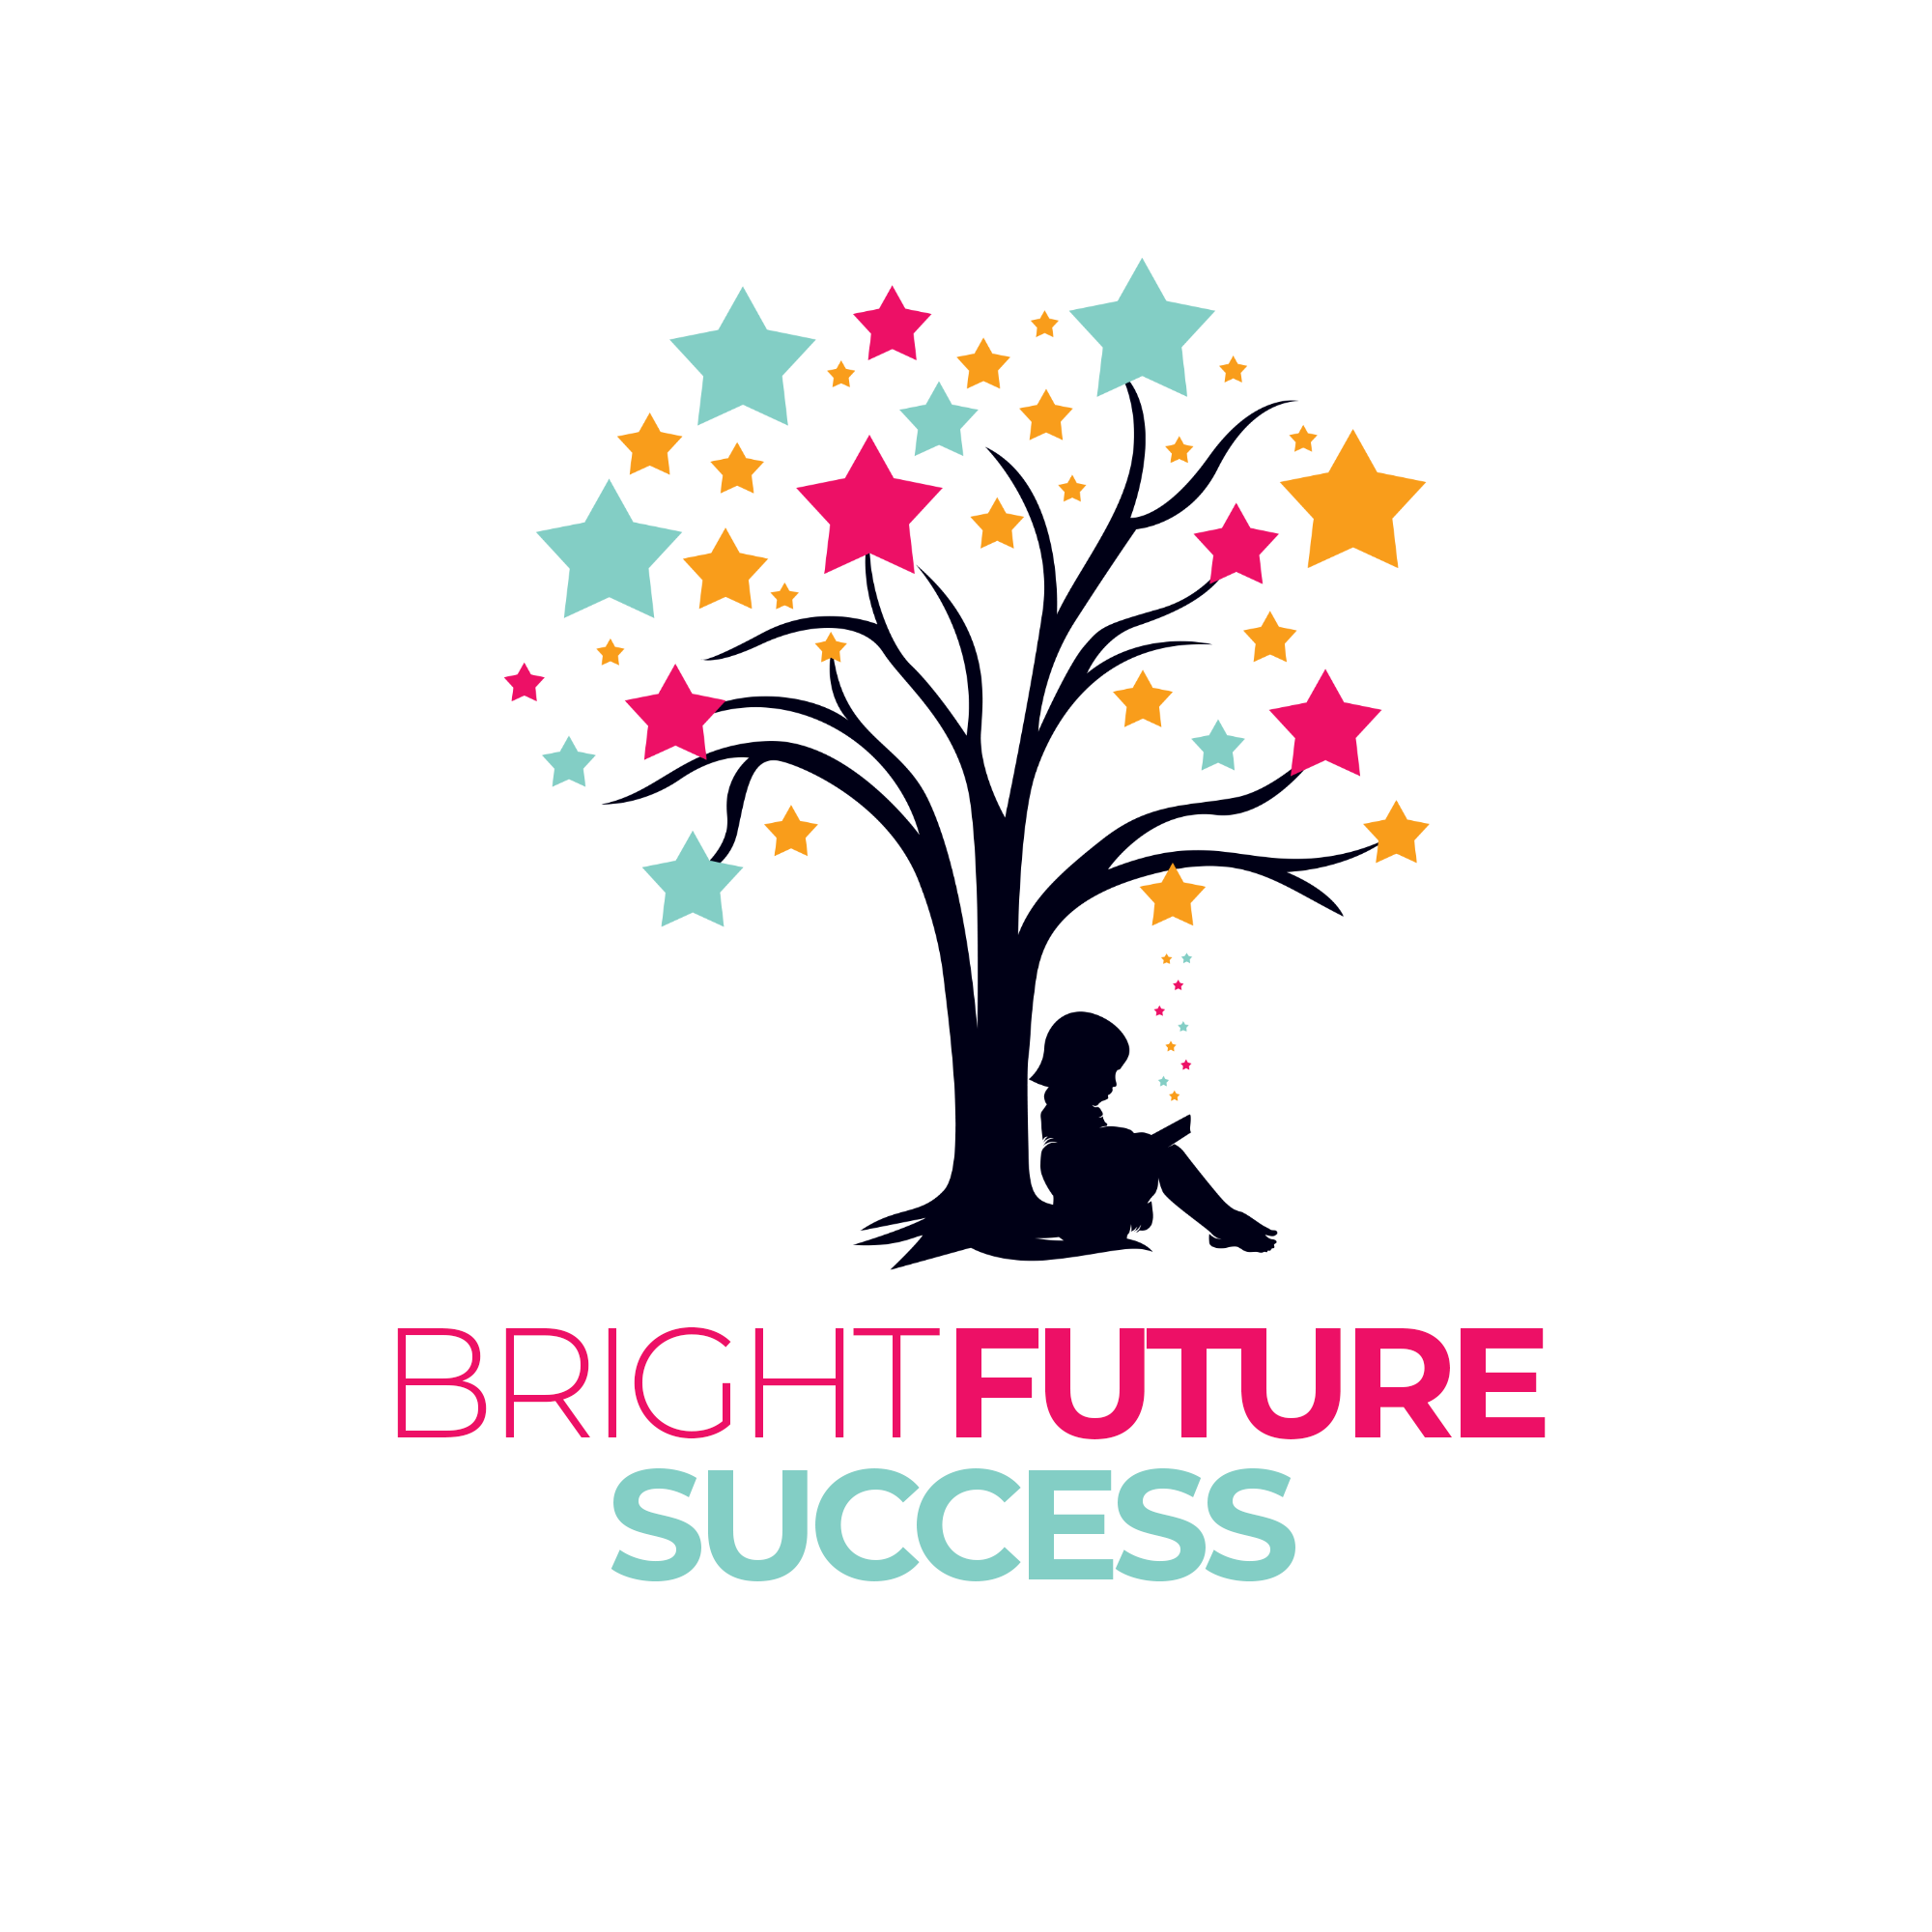 https://www.pakpositions.com/company/bright-future-success